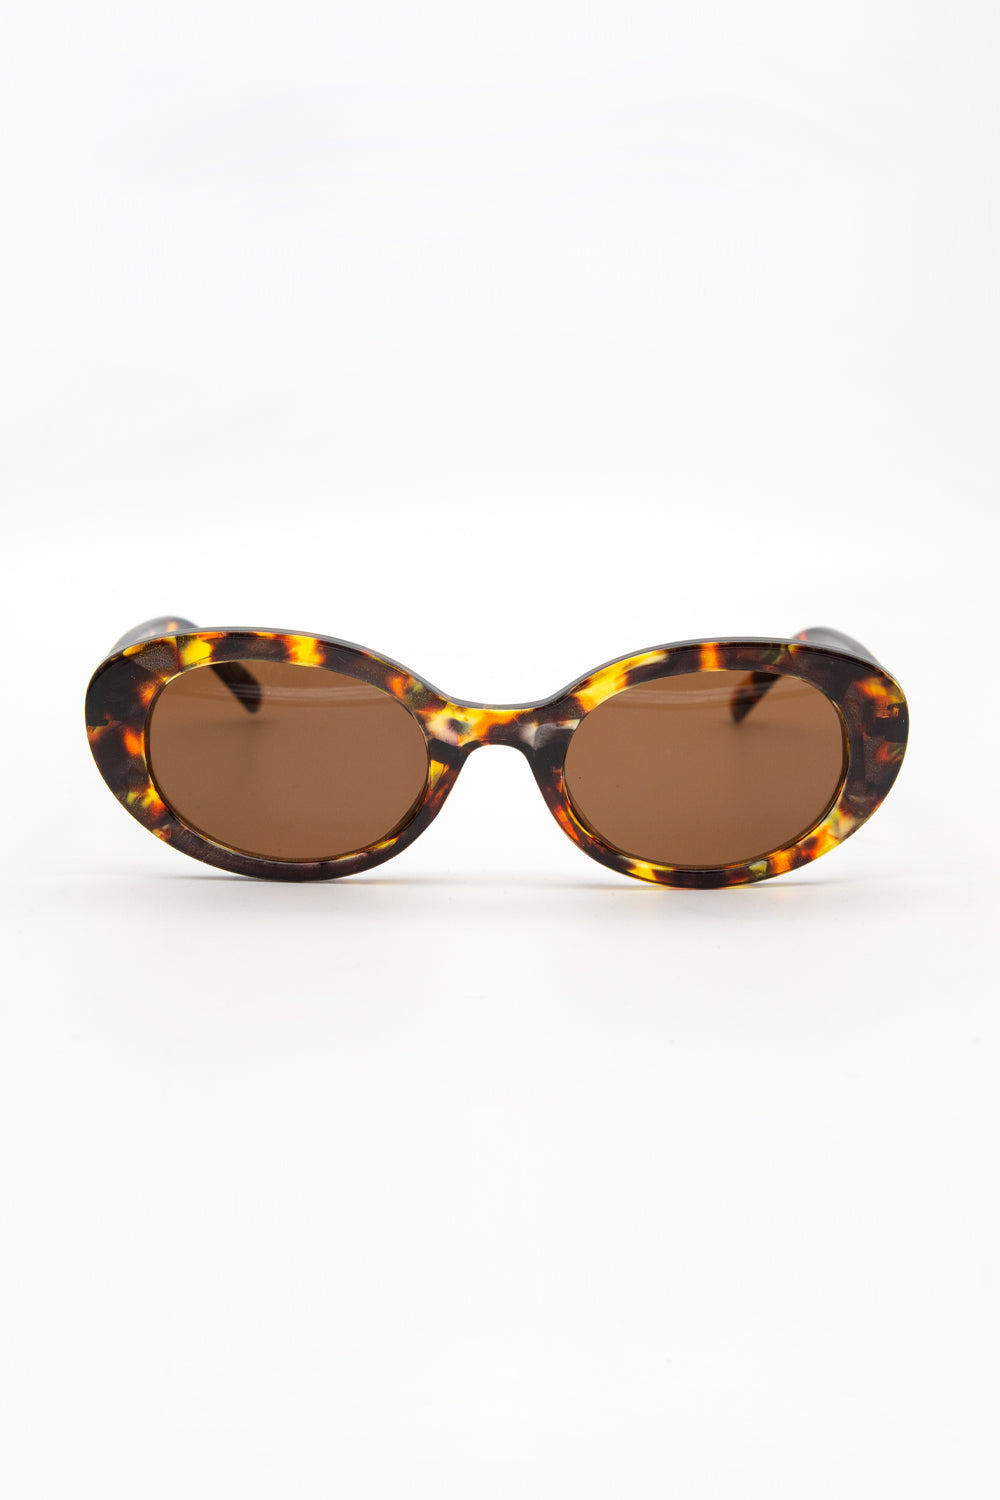 Retro Leopard Print Sunglasses With UV Protection